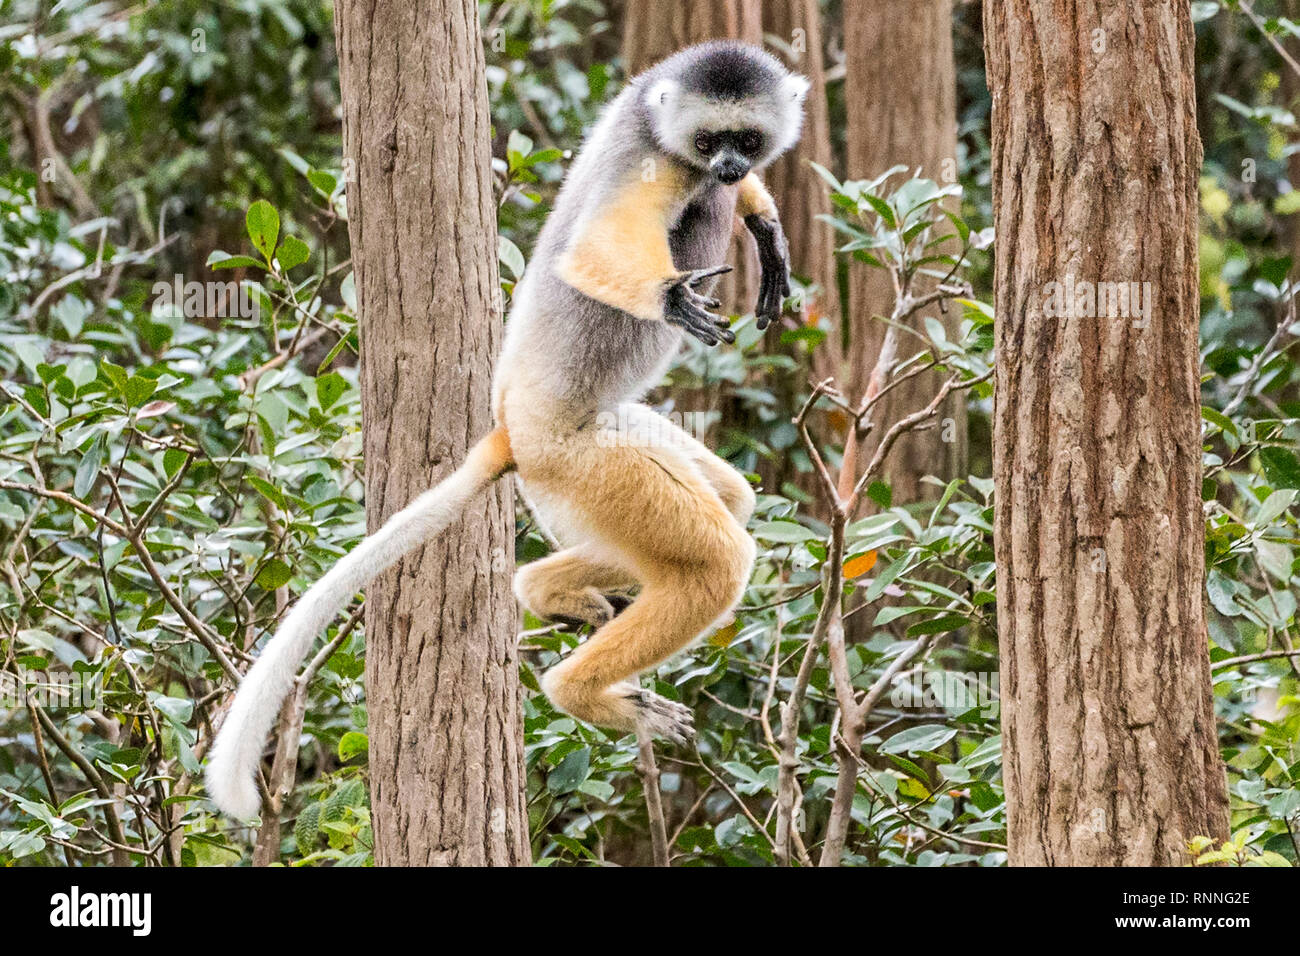 Diademed Sifakasor aka diademed simpona, Propithecus diadema, a lemur,leaping, Lemur Island, Mantandia National Park, Madagascar Stock Photo